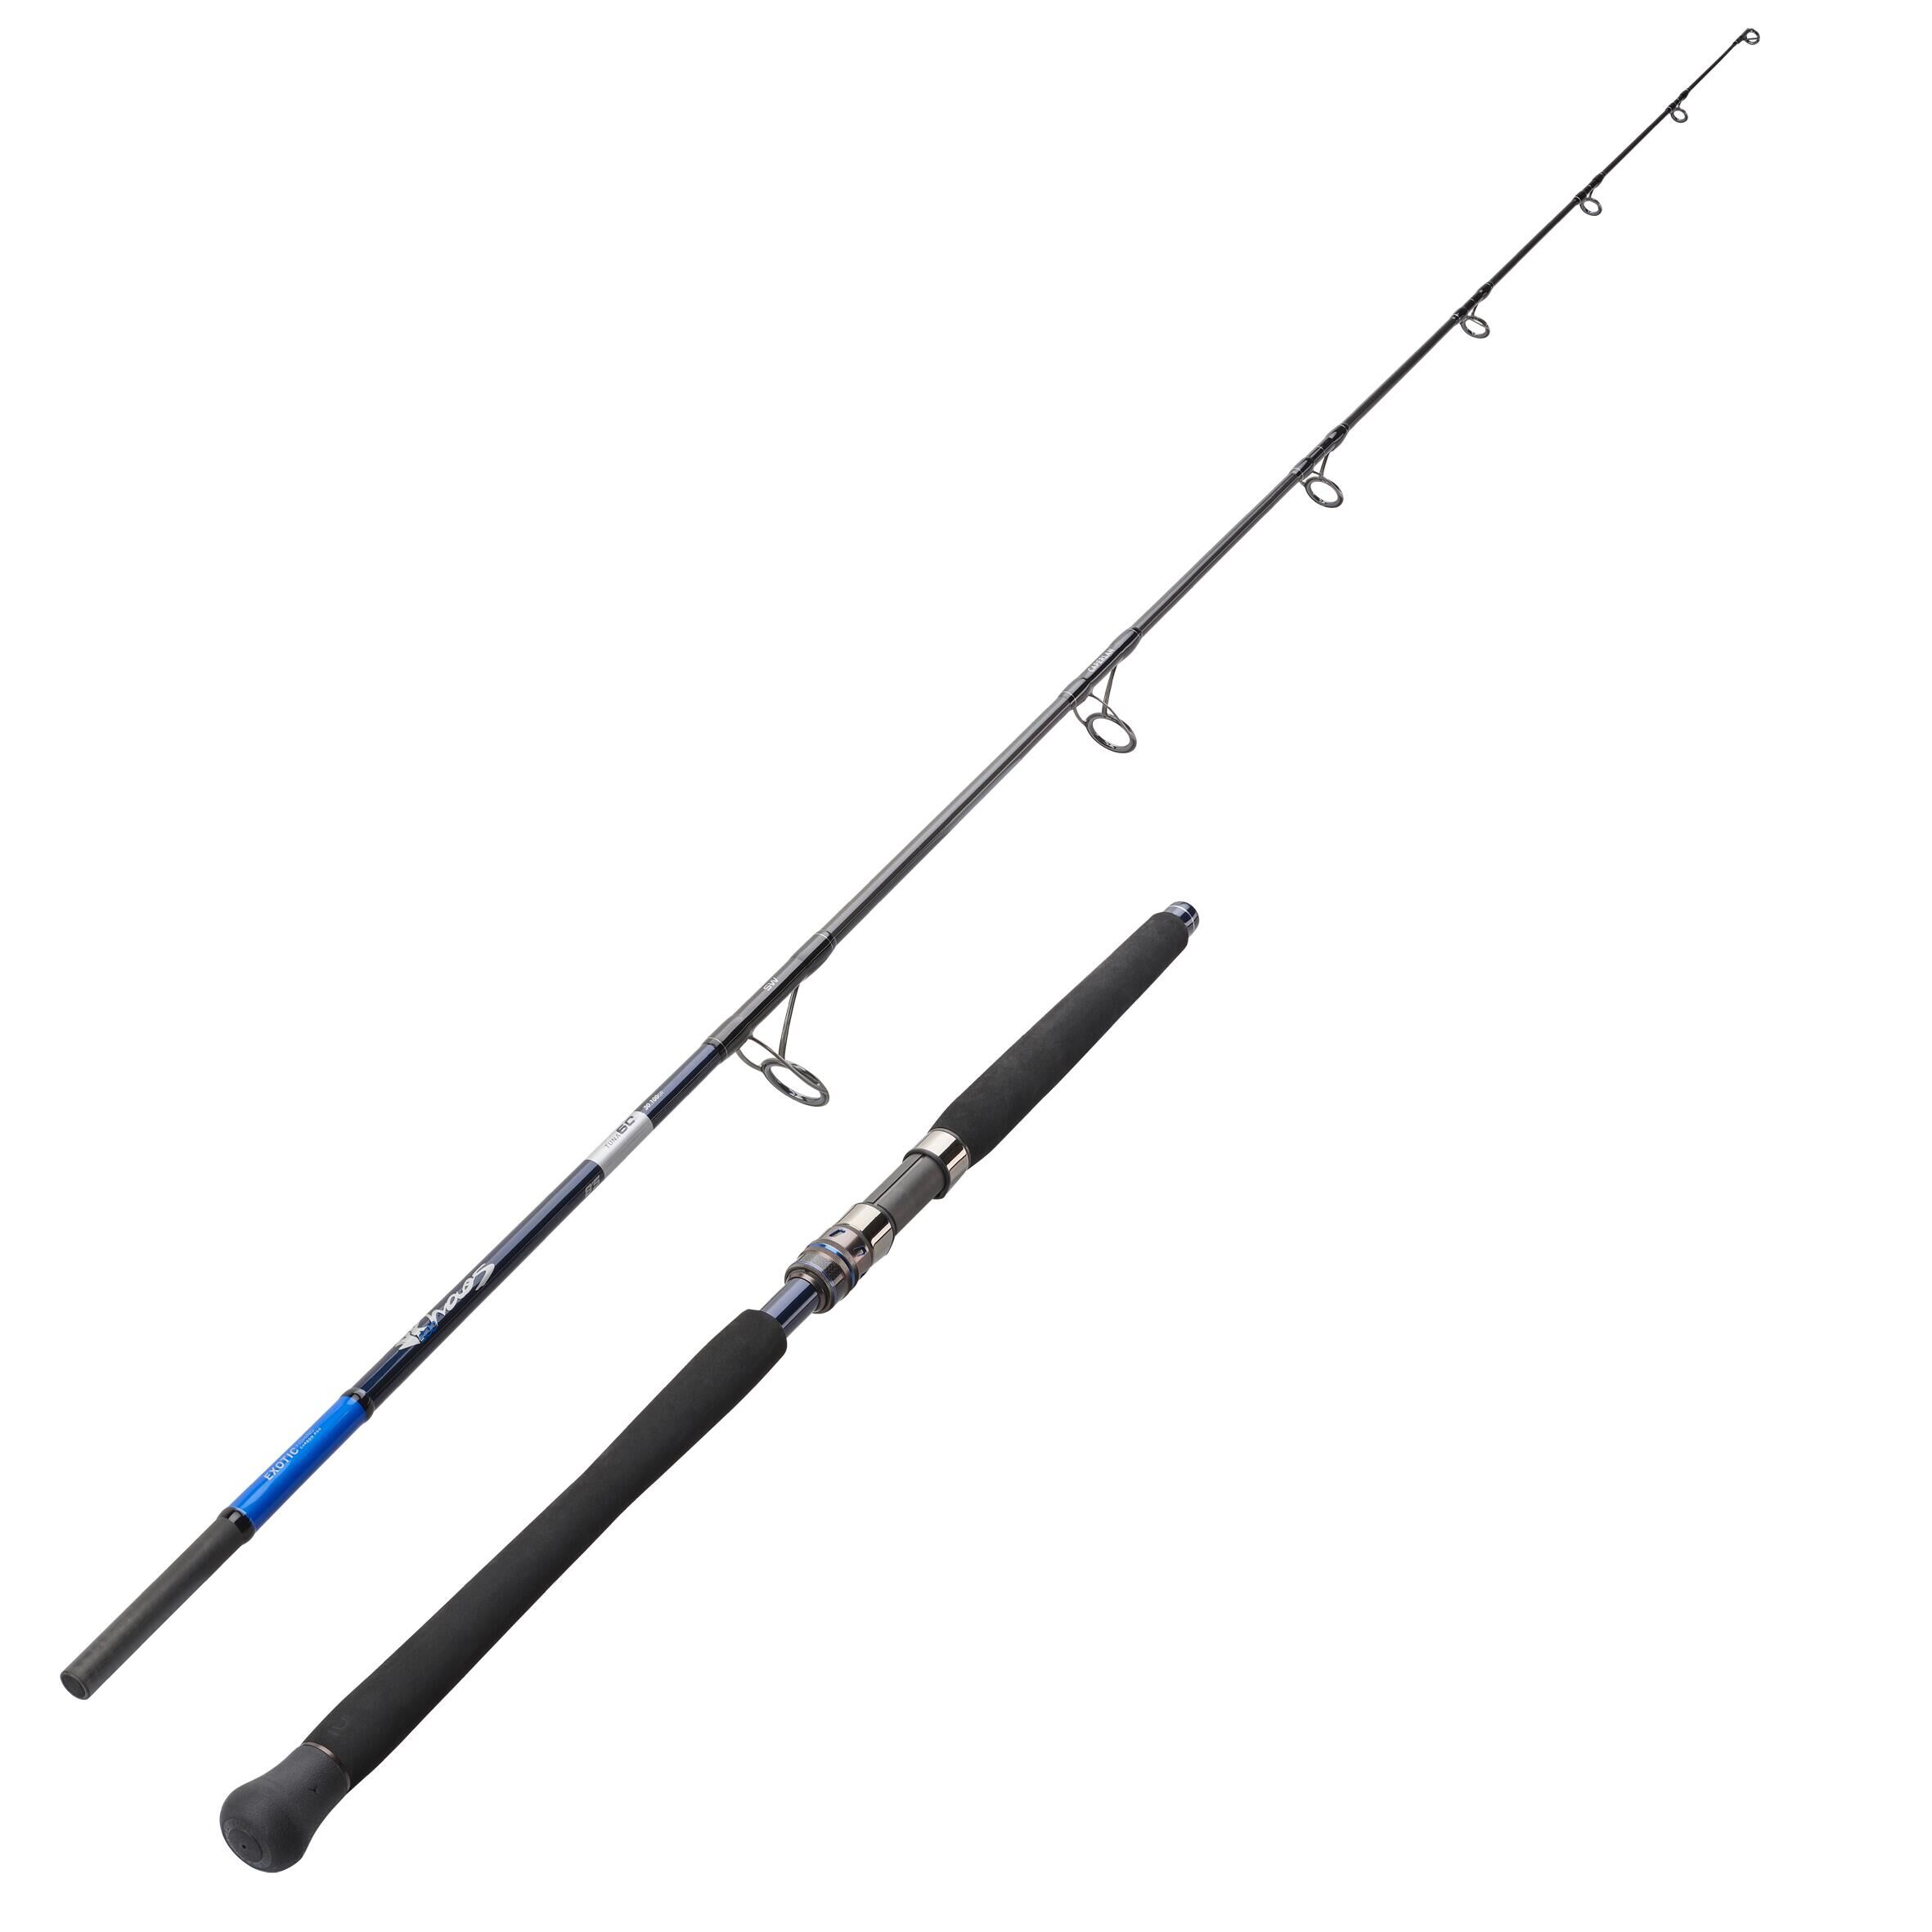 CAPERLAN Exotic fishing rod KHAOS-900 260 60 lbs for tuna fishing in the sea